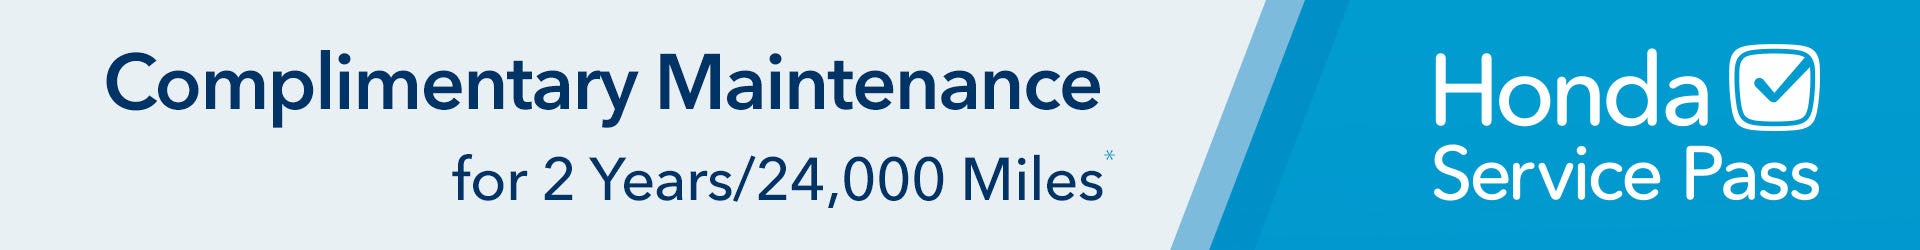 Complimentary Maintenance for 2 years / 24,000 Miles Honda Service Pass | Paul Moak Honda in Jackson MS